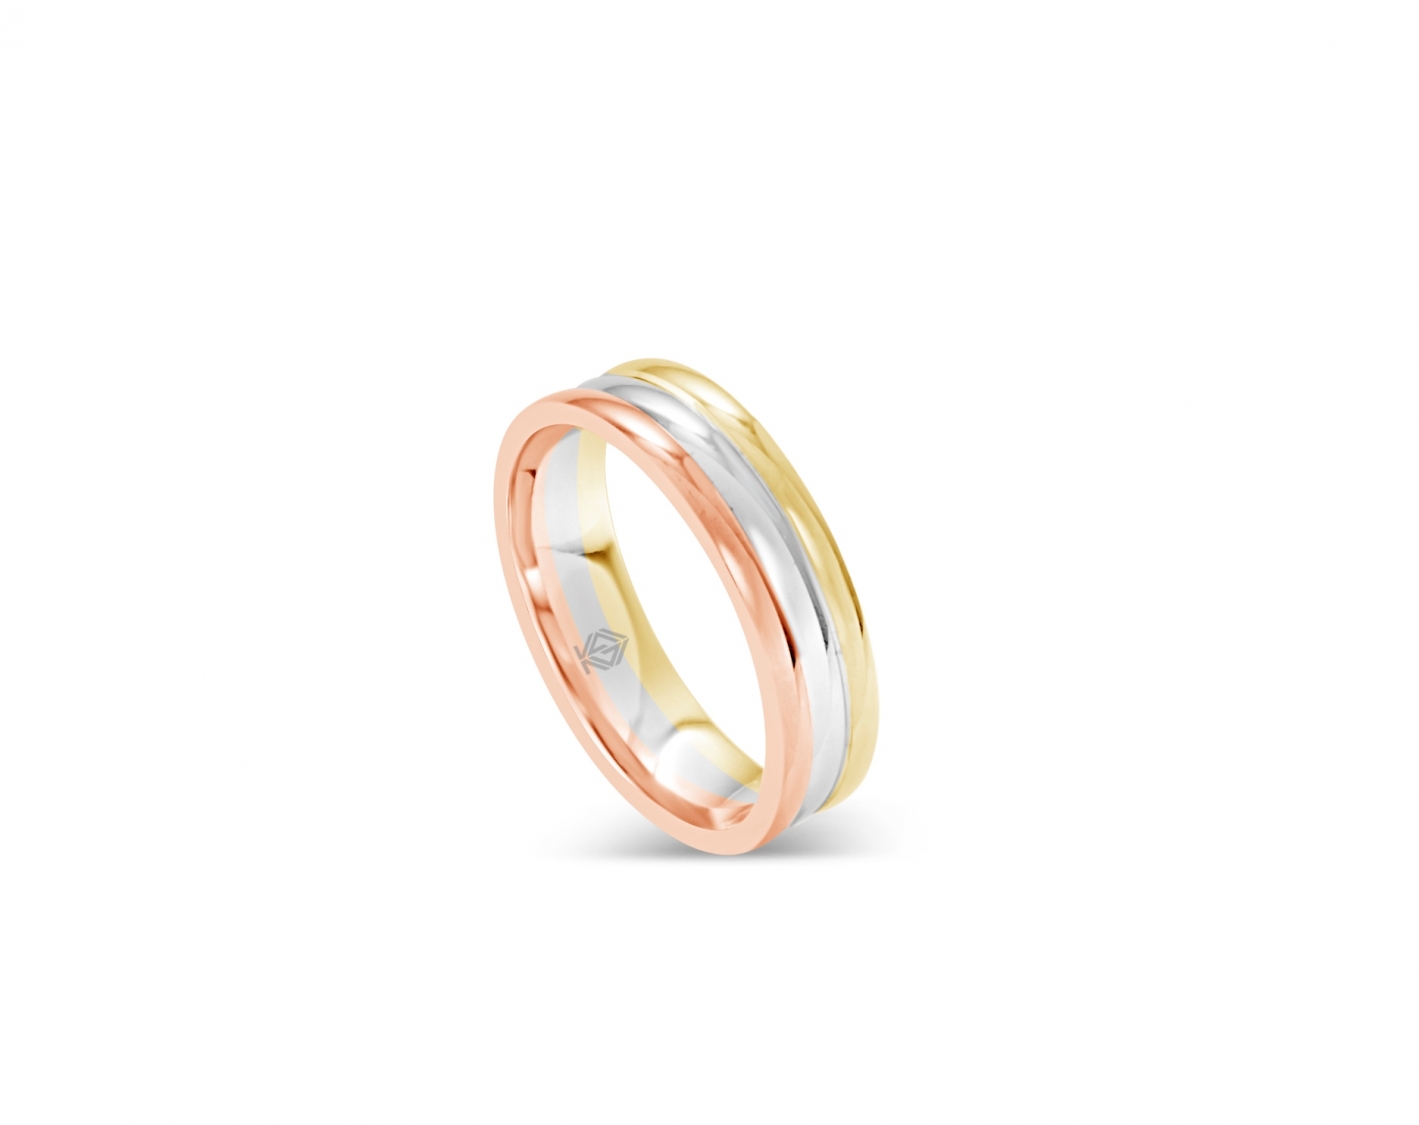 18k white gold 5mm three-toned wedding ring